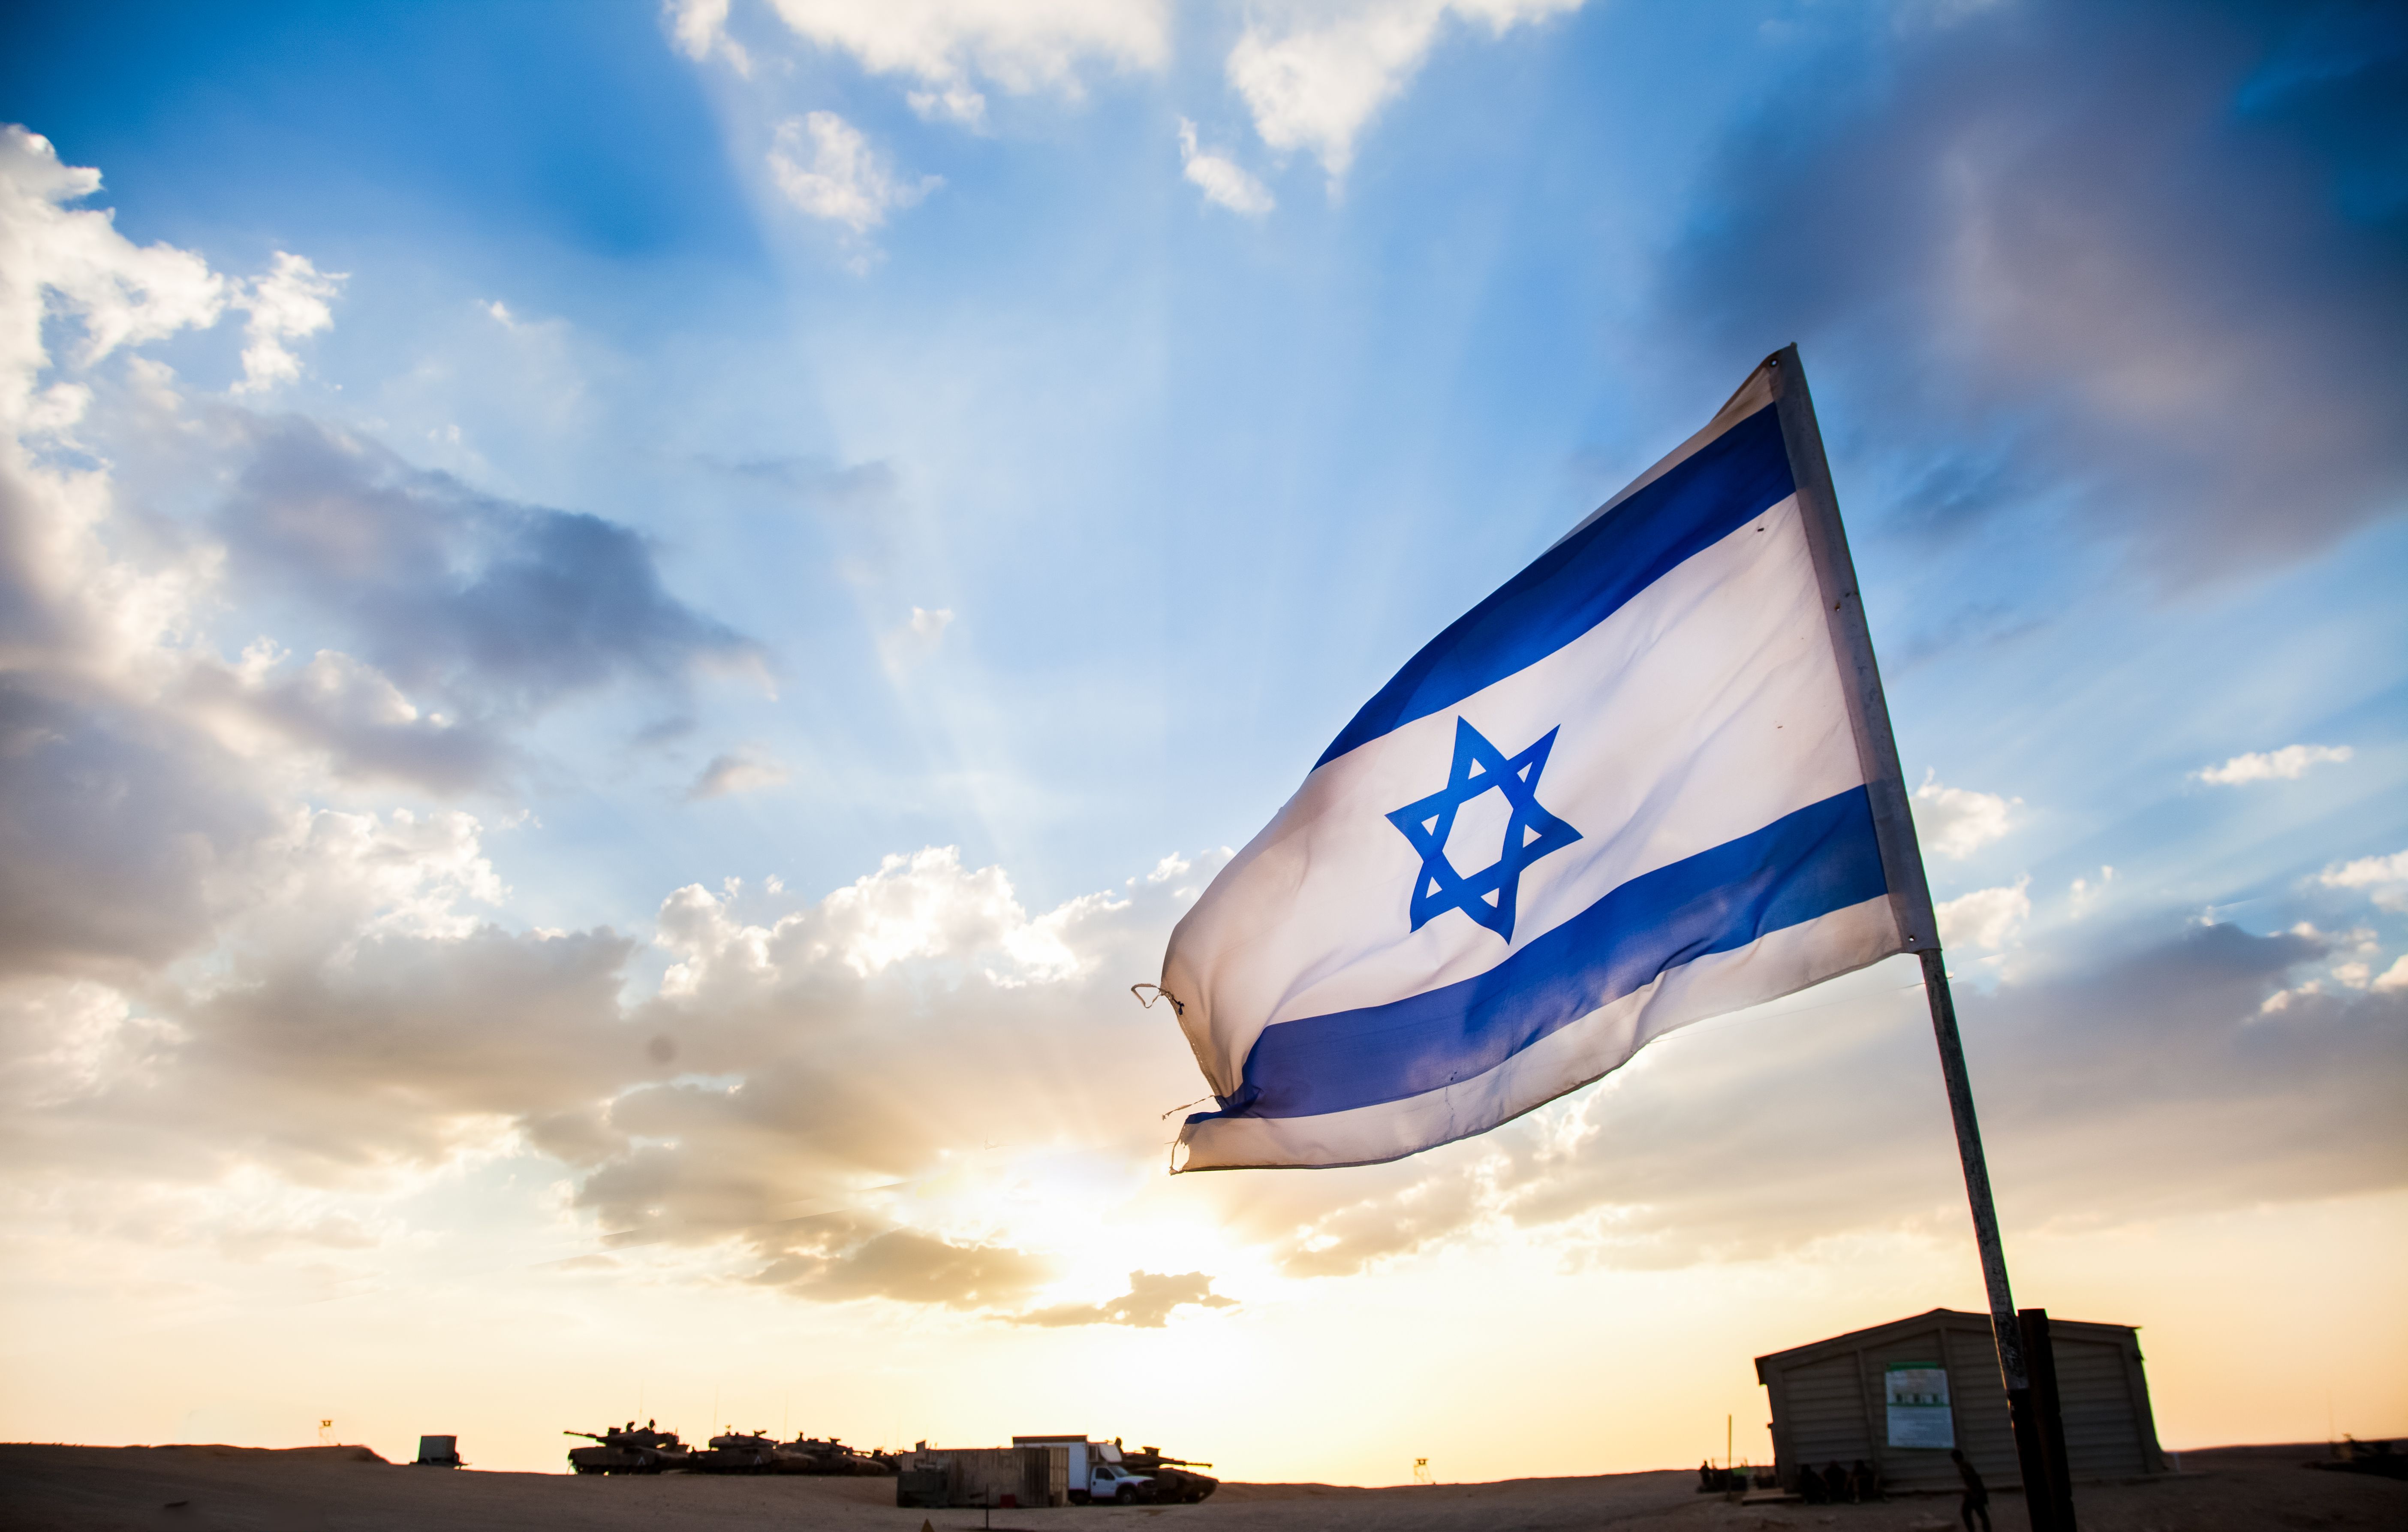 Tel aviv israel wallpaper flag image downloader